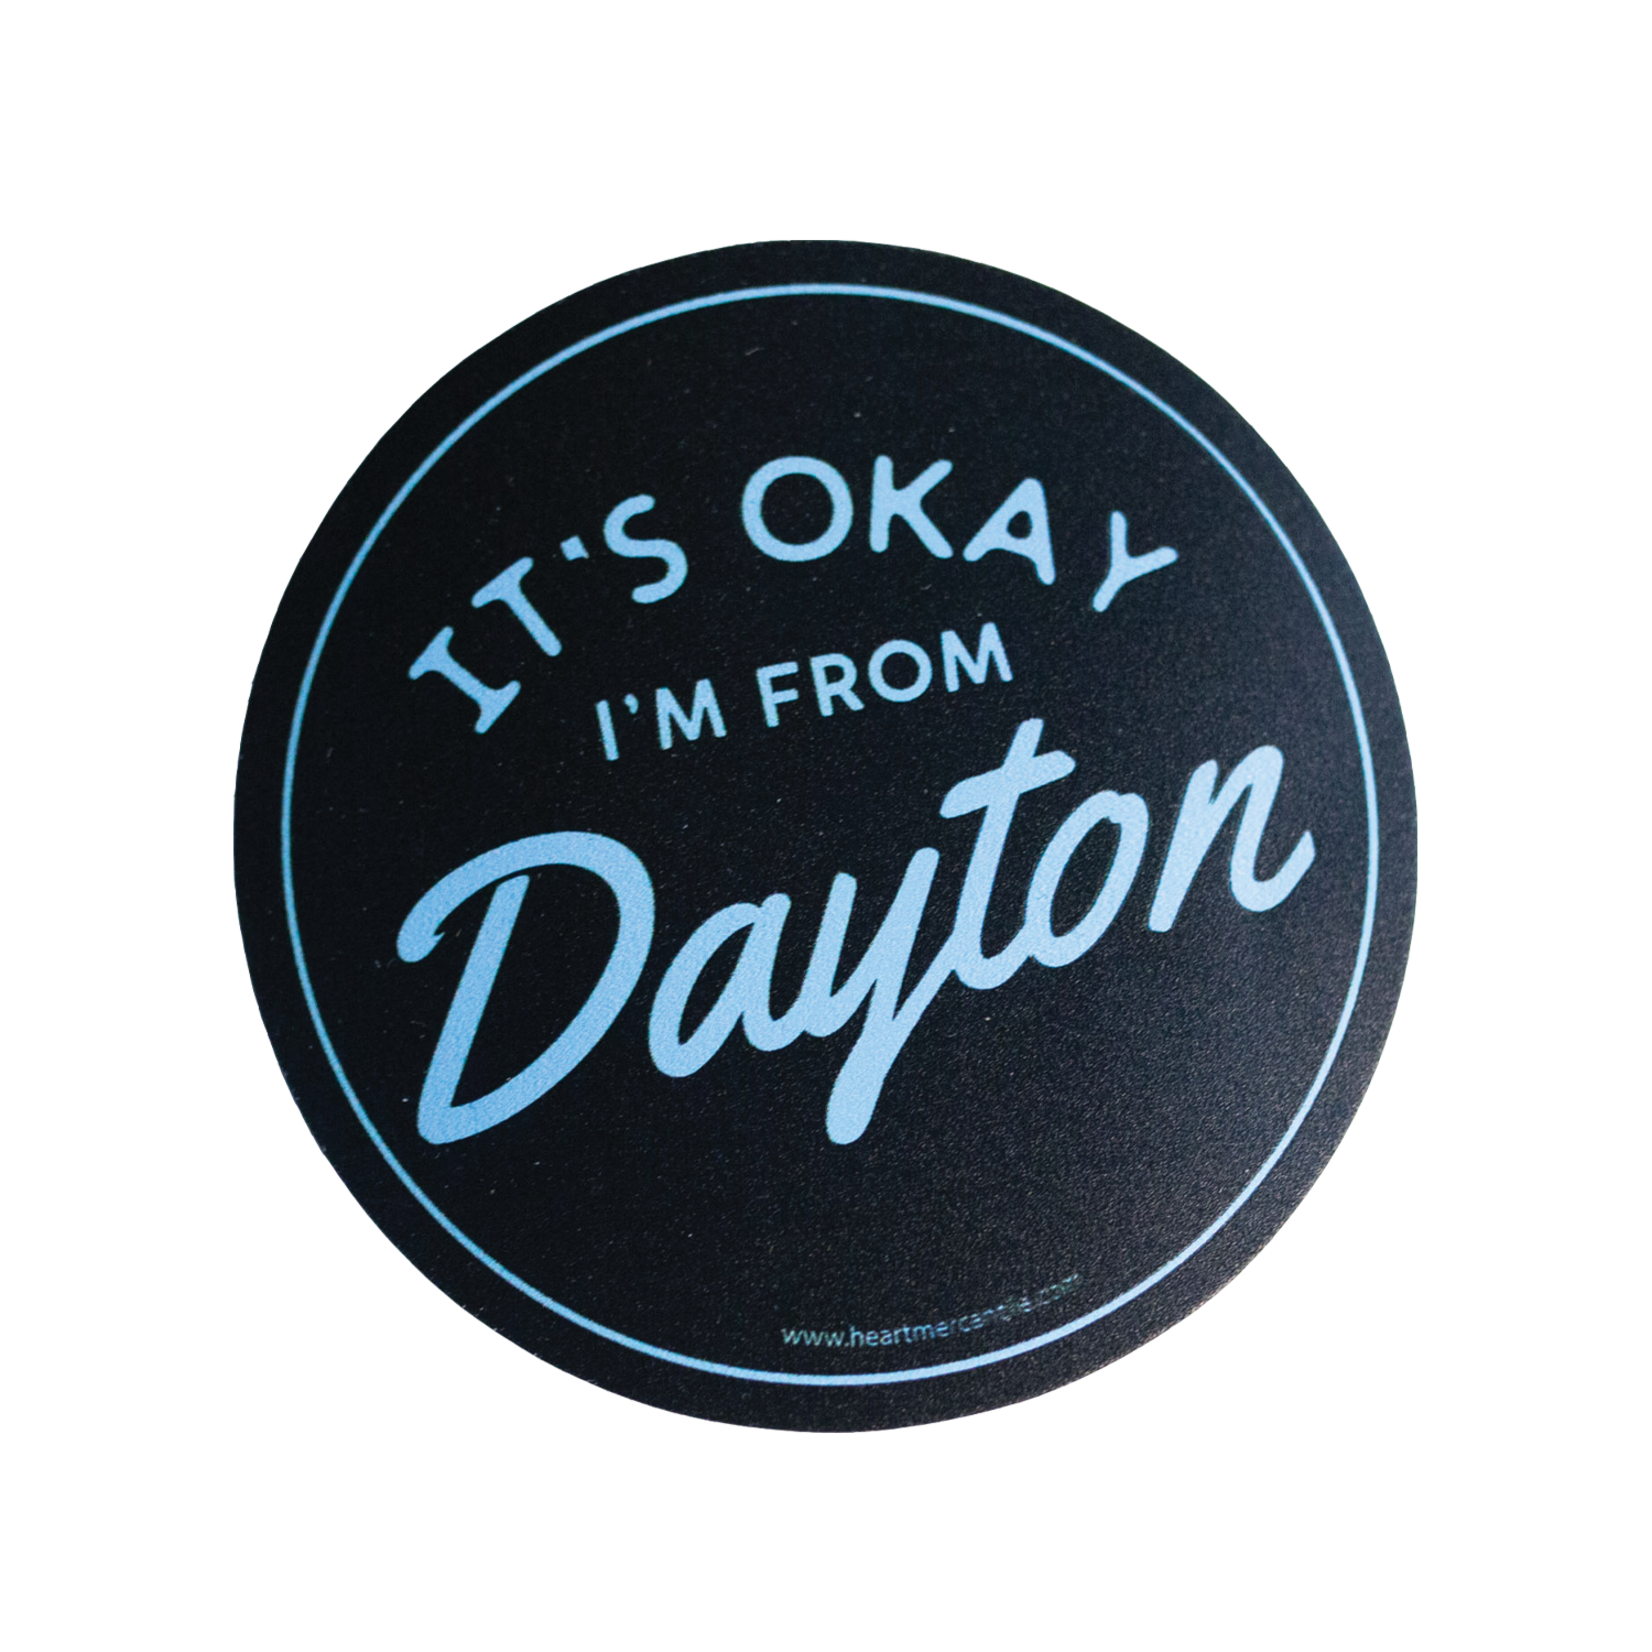 It's Okay I'm From Dayton Sticker